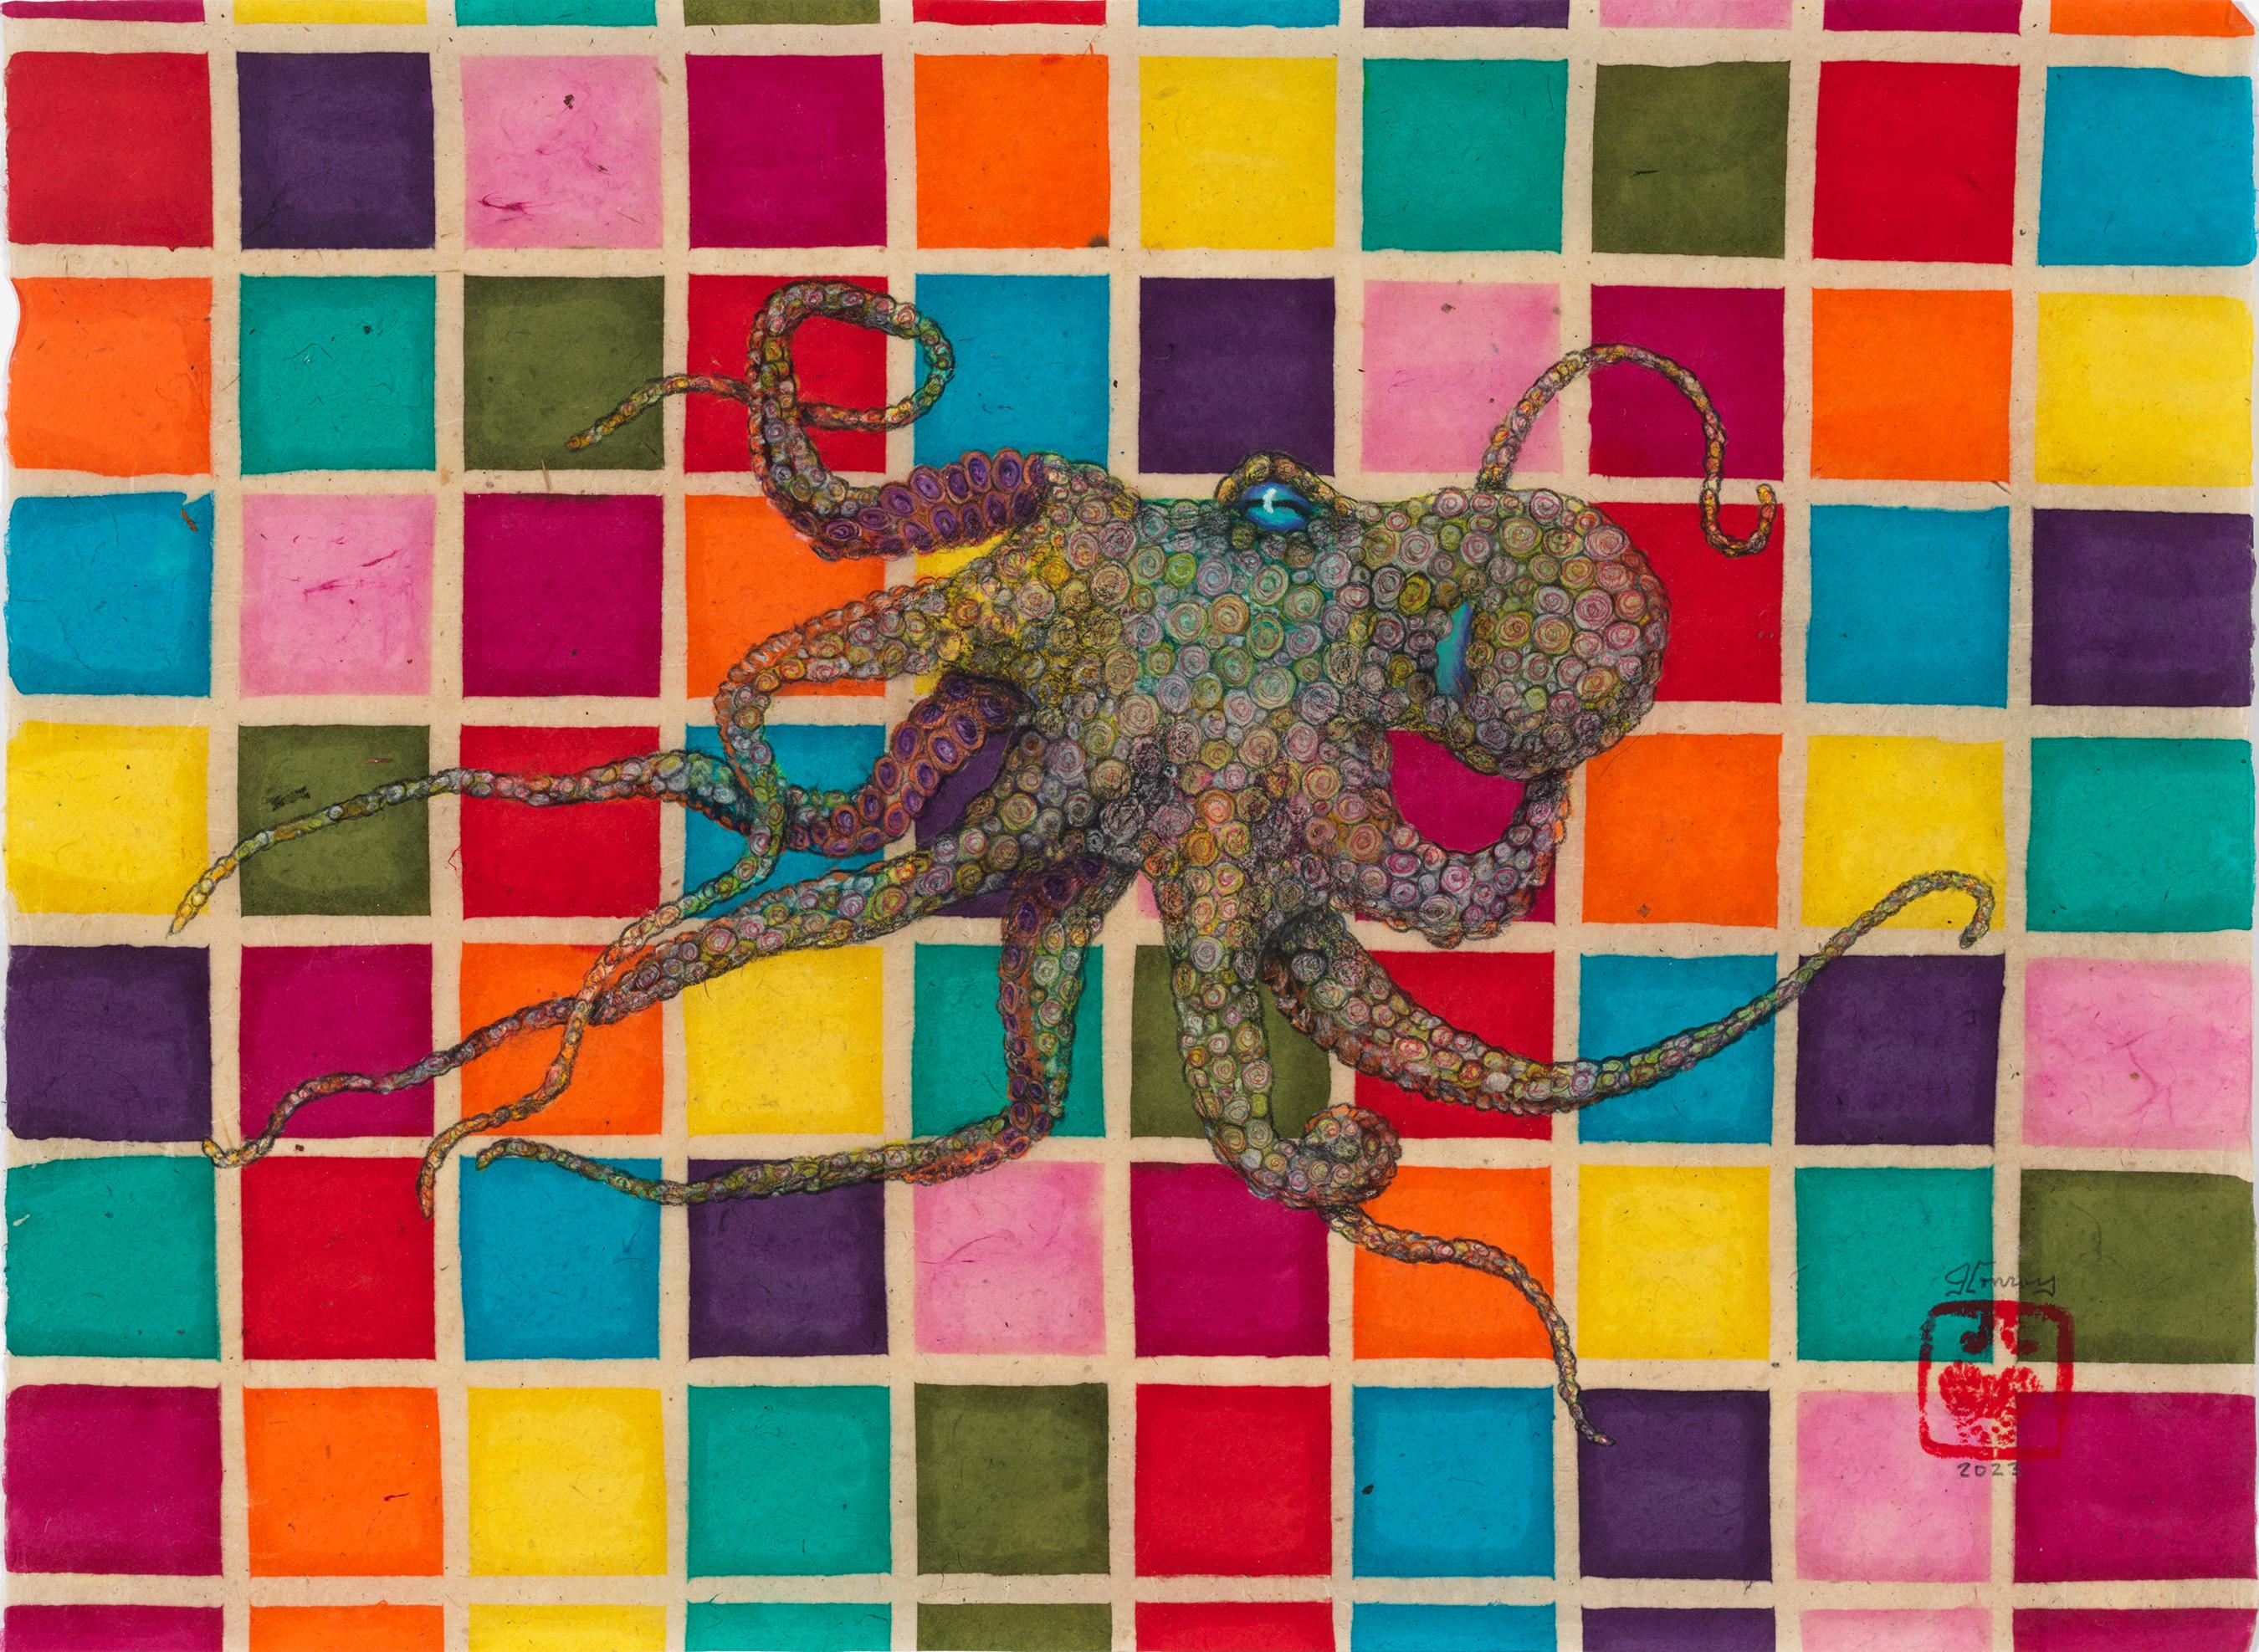 Jeff Conroy Animal Painting - Studio 54 - Bananarama - Gyotaku Style Sumi Ink Painting of an Octopus 